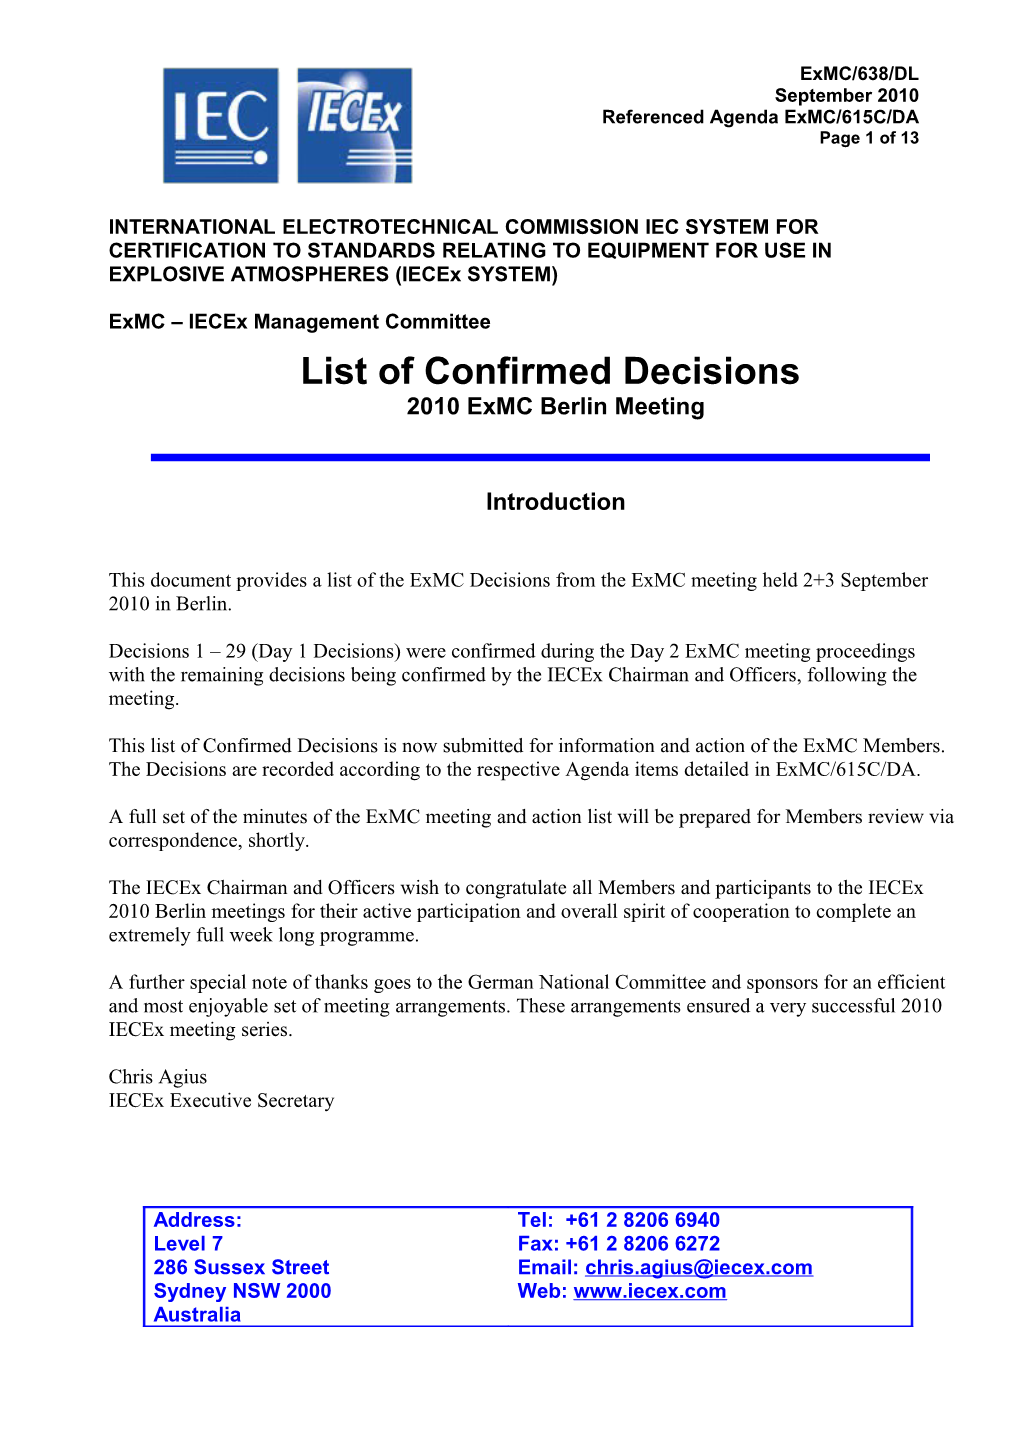 2010 Berlin Exmc Decision List